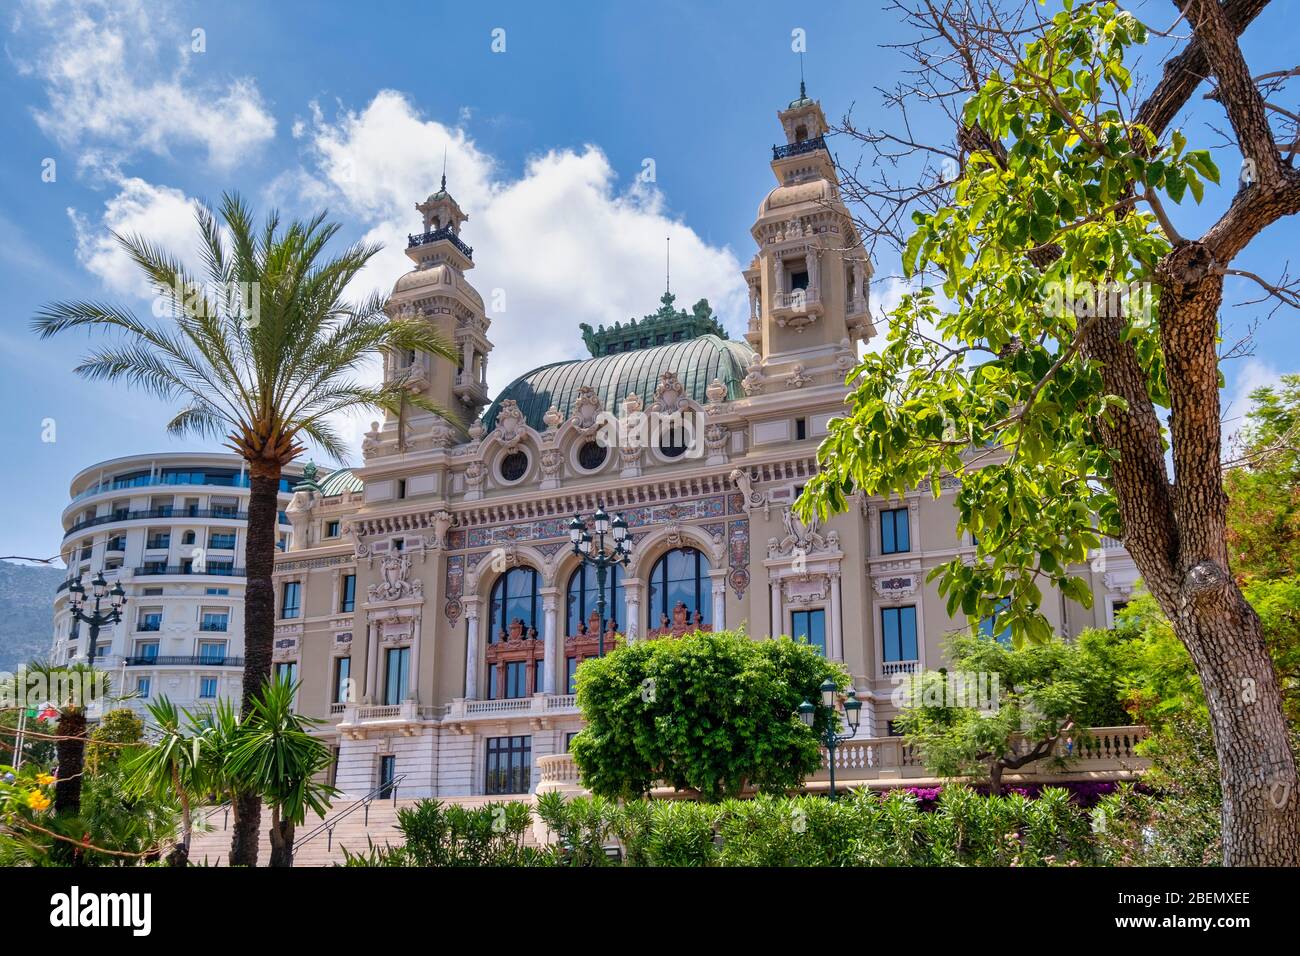 Salle Garnier opera house on the back of the Monte Carlo casino building, Monaco Stock Photo